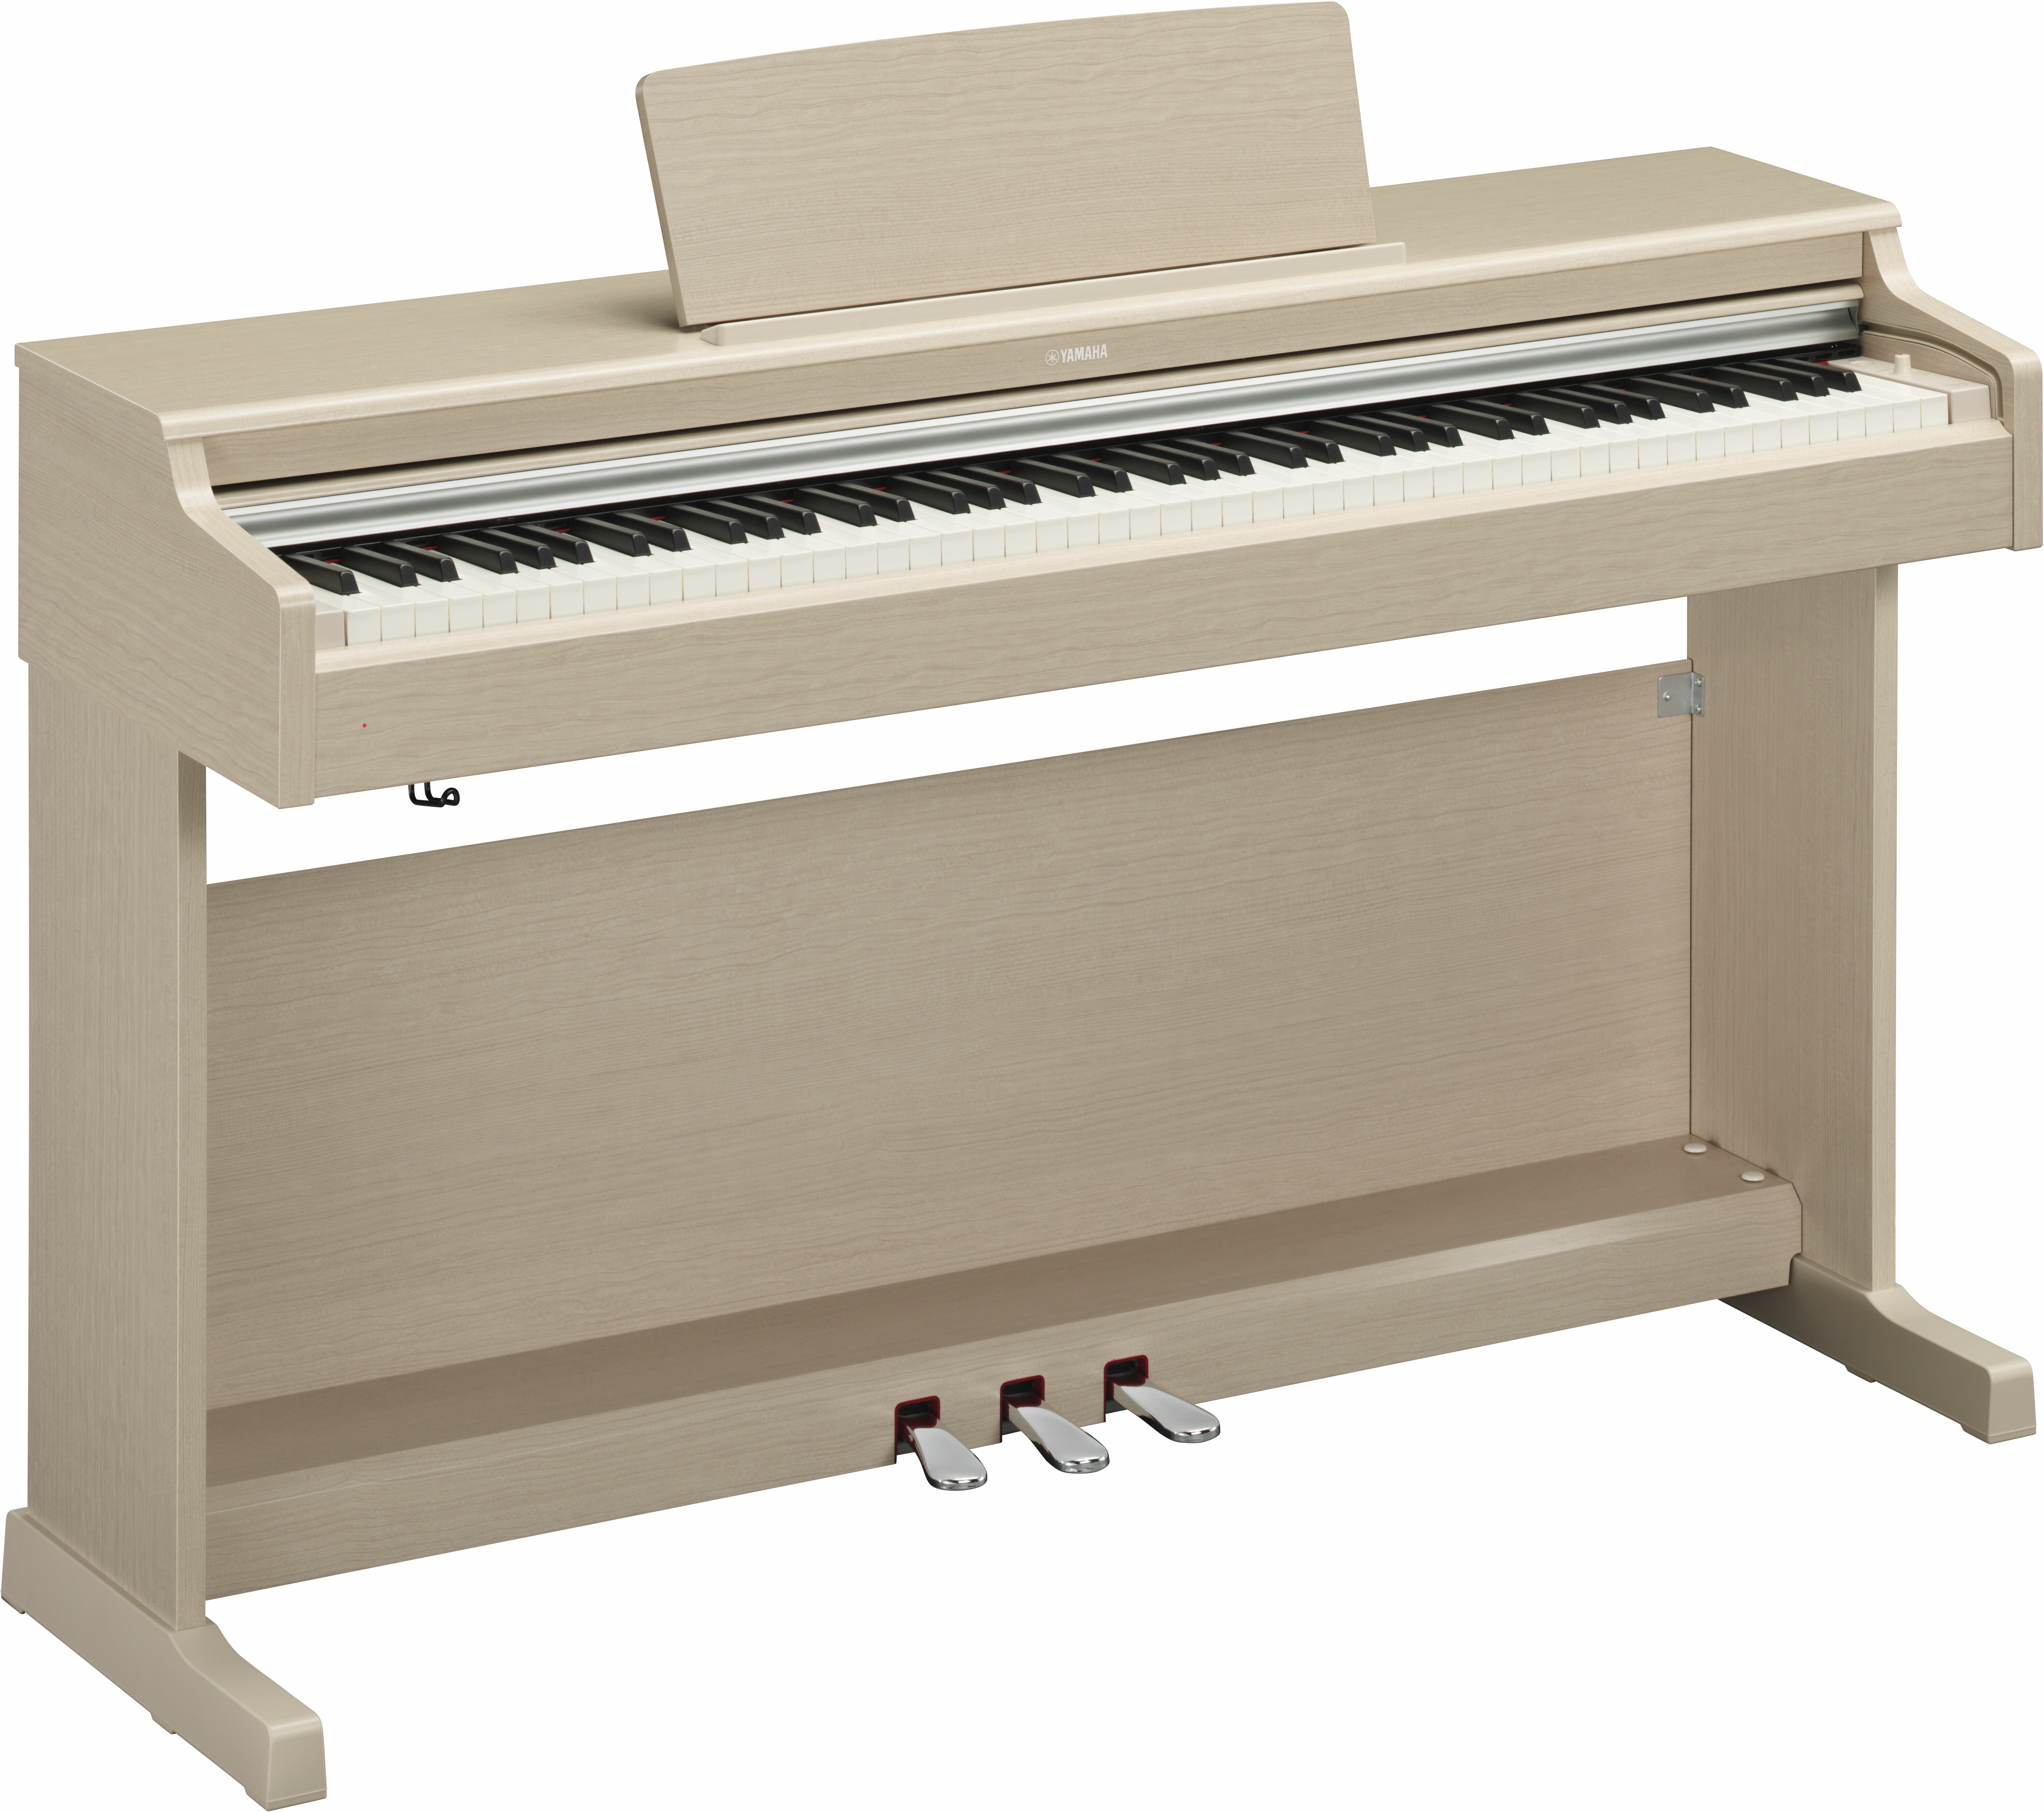 Yamaha Ydp-164 Arius - Walnut - Digital piano with stand - Main picture